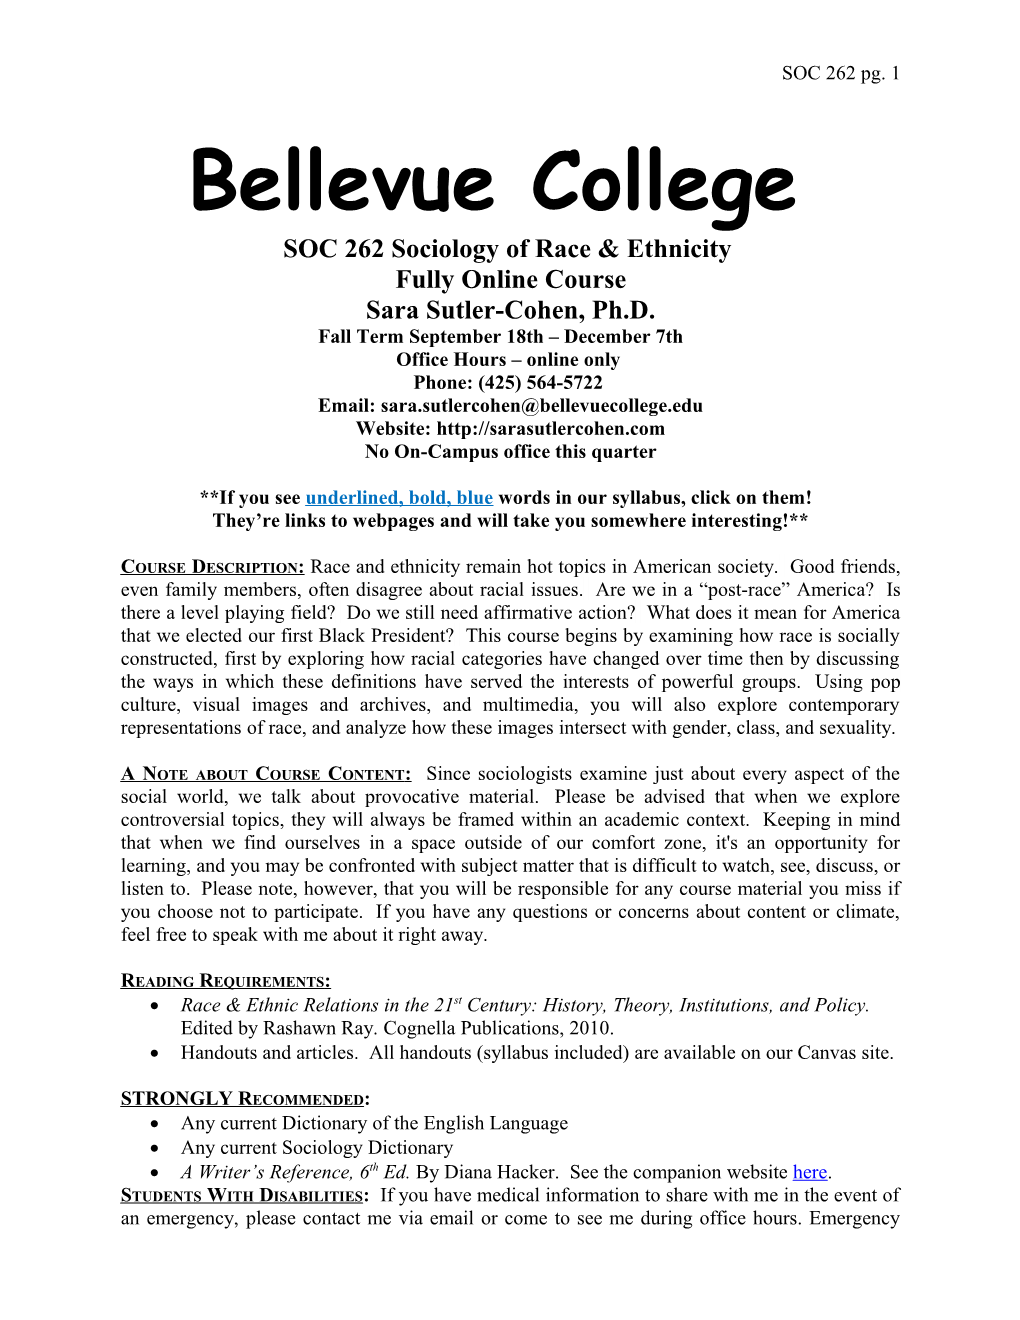 Bellevue College SOC 262 Sociology of Race & Ethnicity